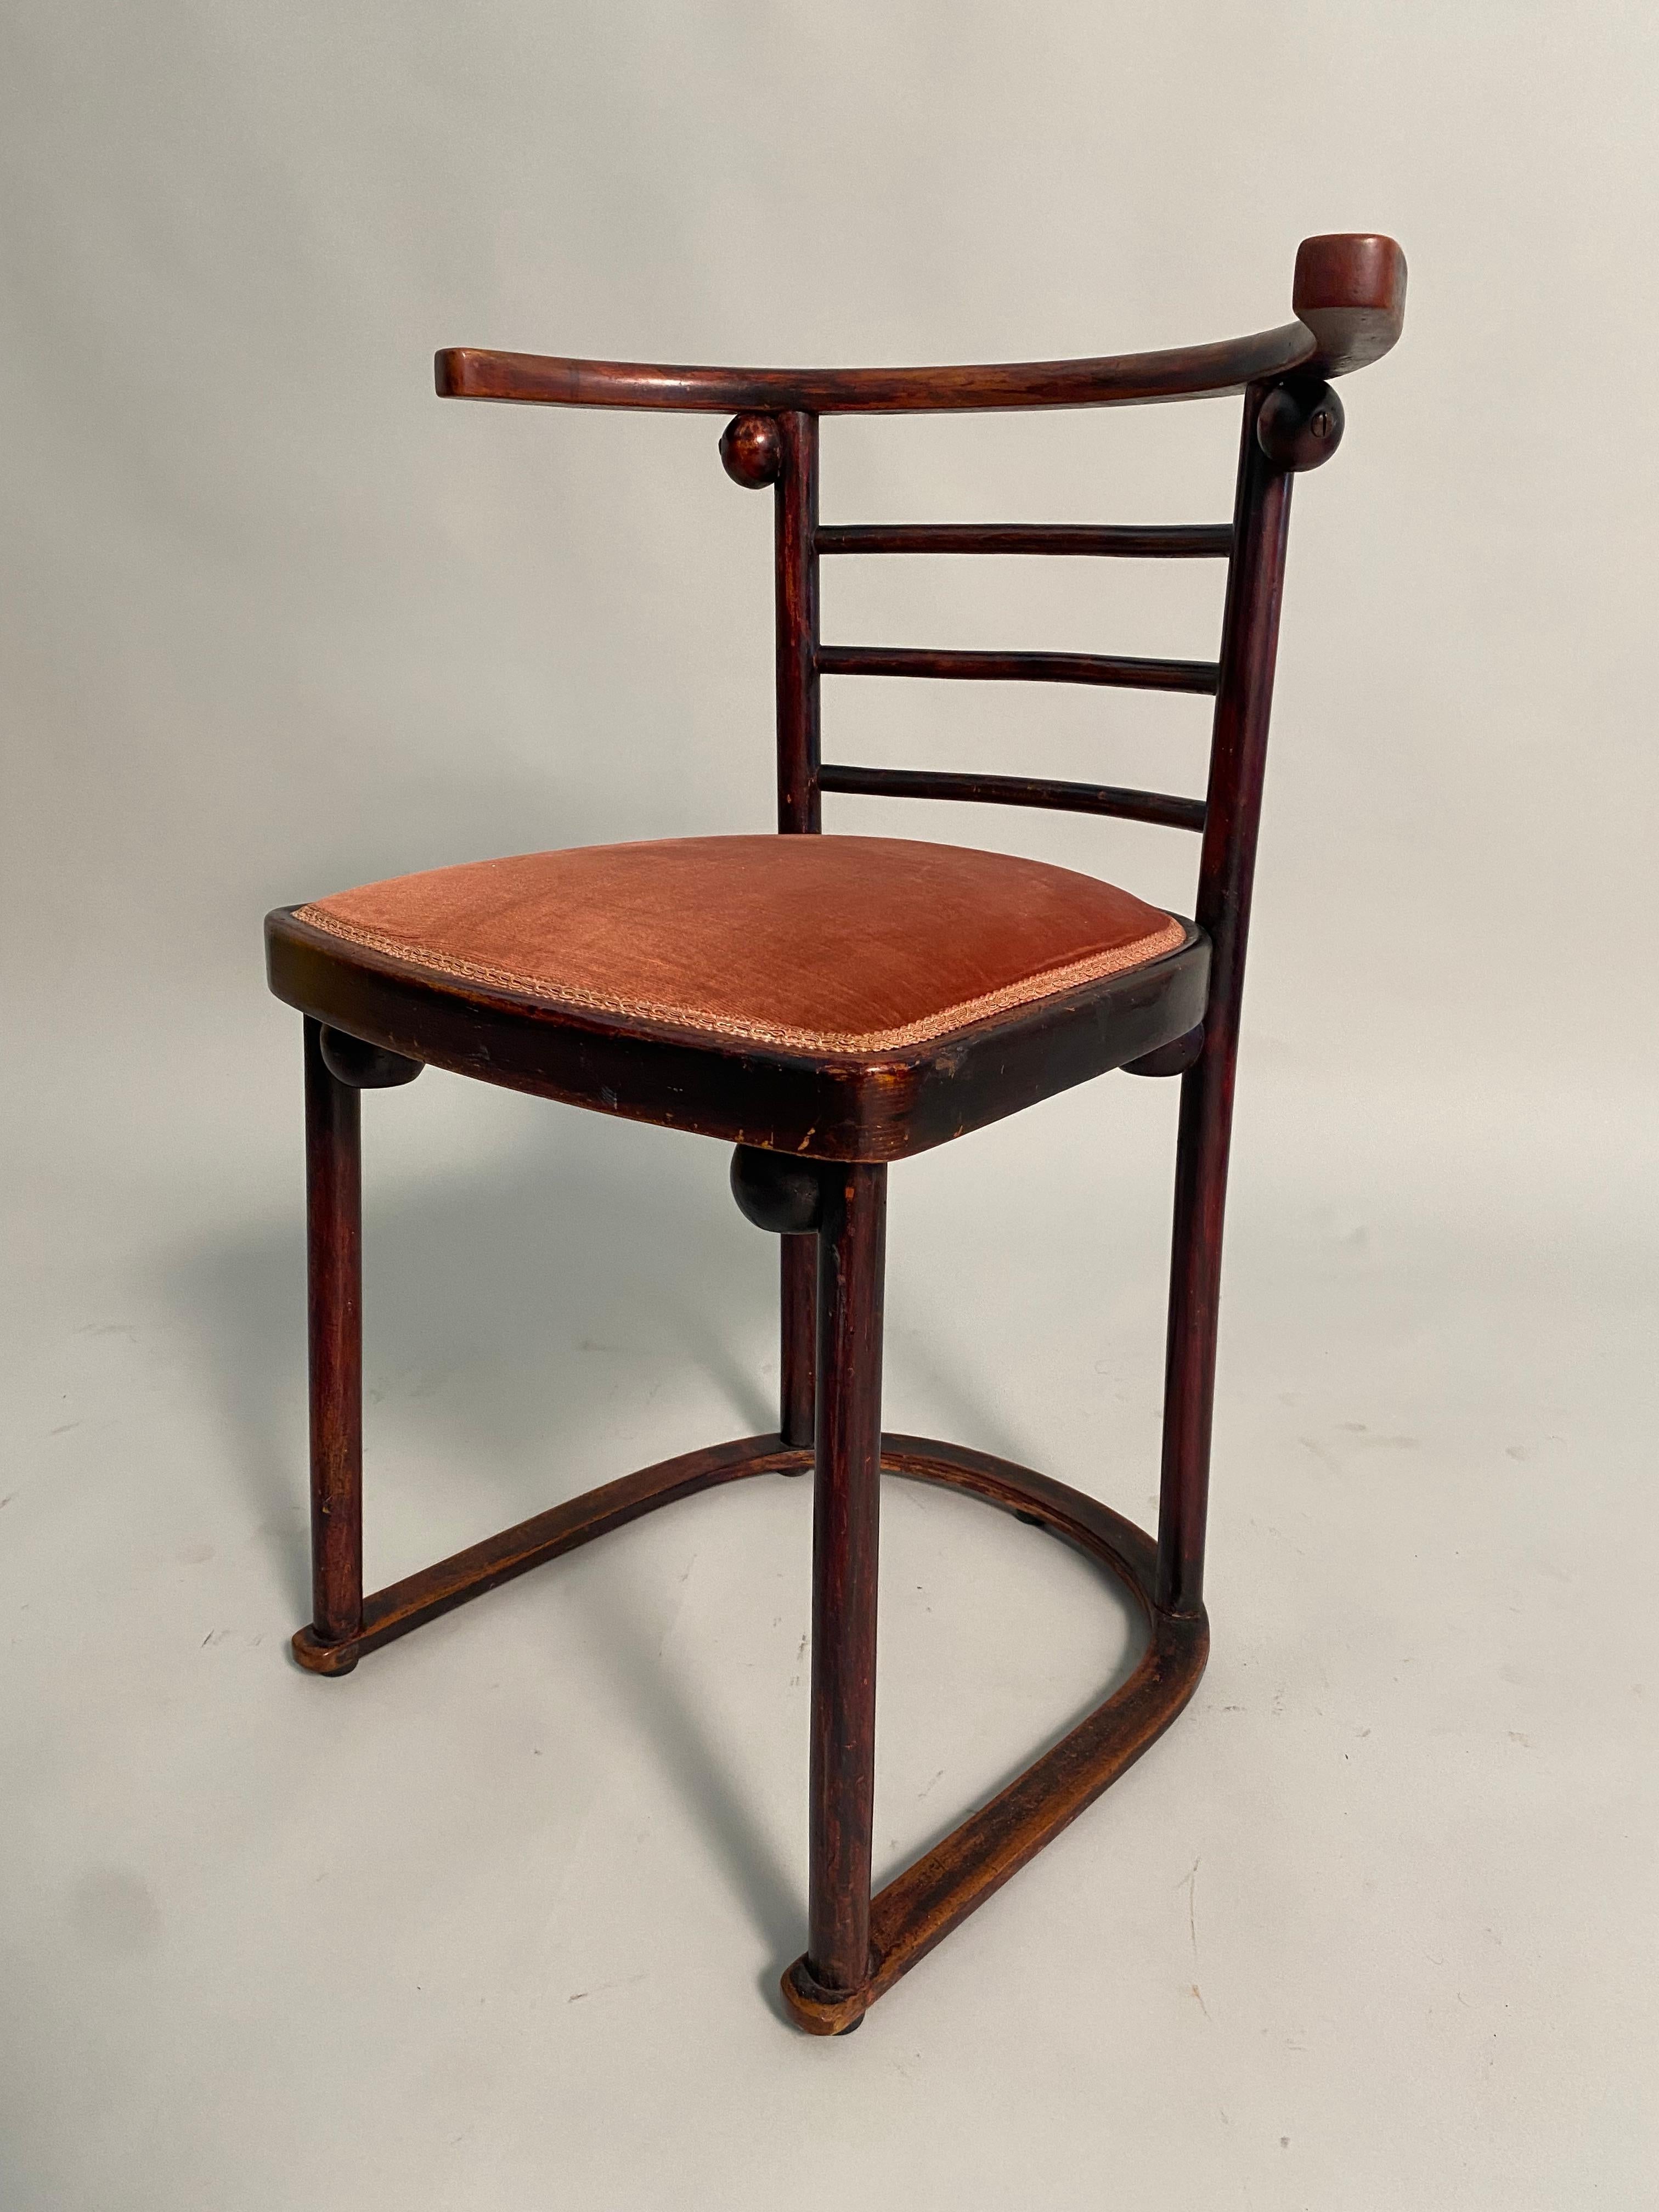 Early 20th Century Josef Hoffmann, Fledermaus Chairs for J.J. Kohn, Austria, 1905